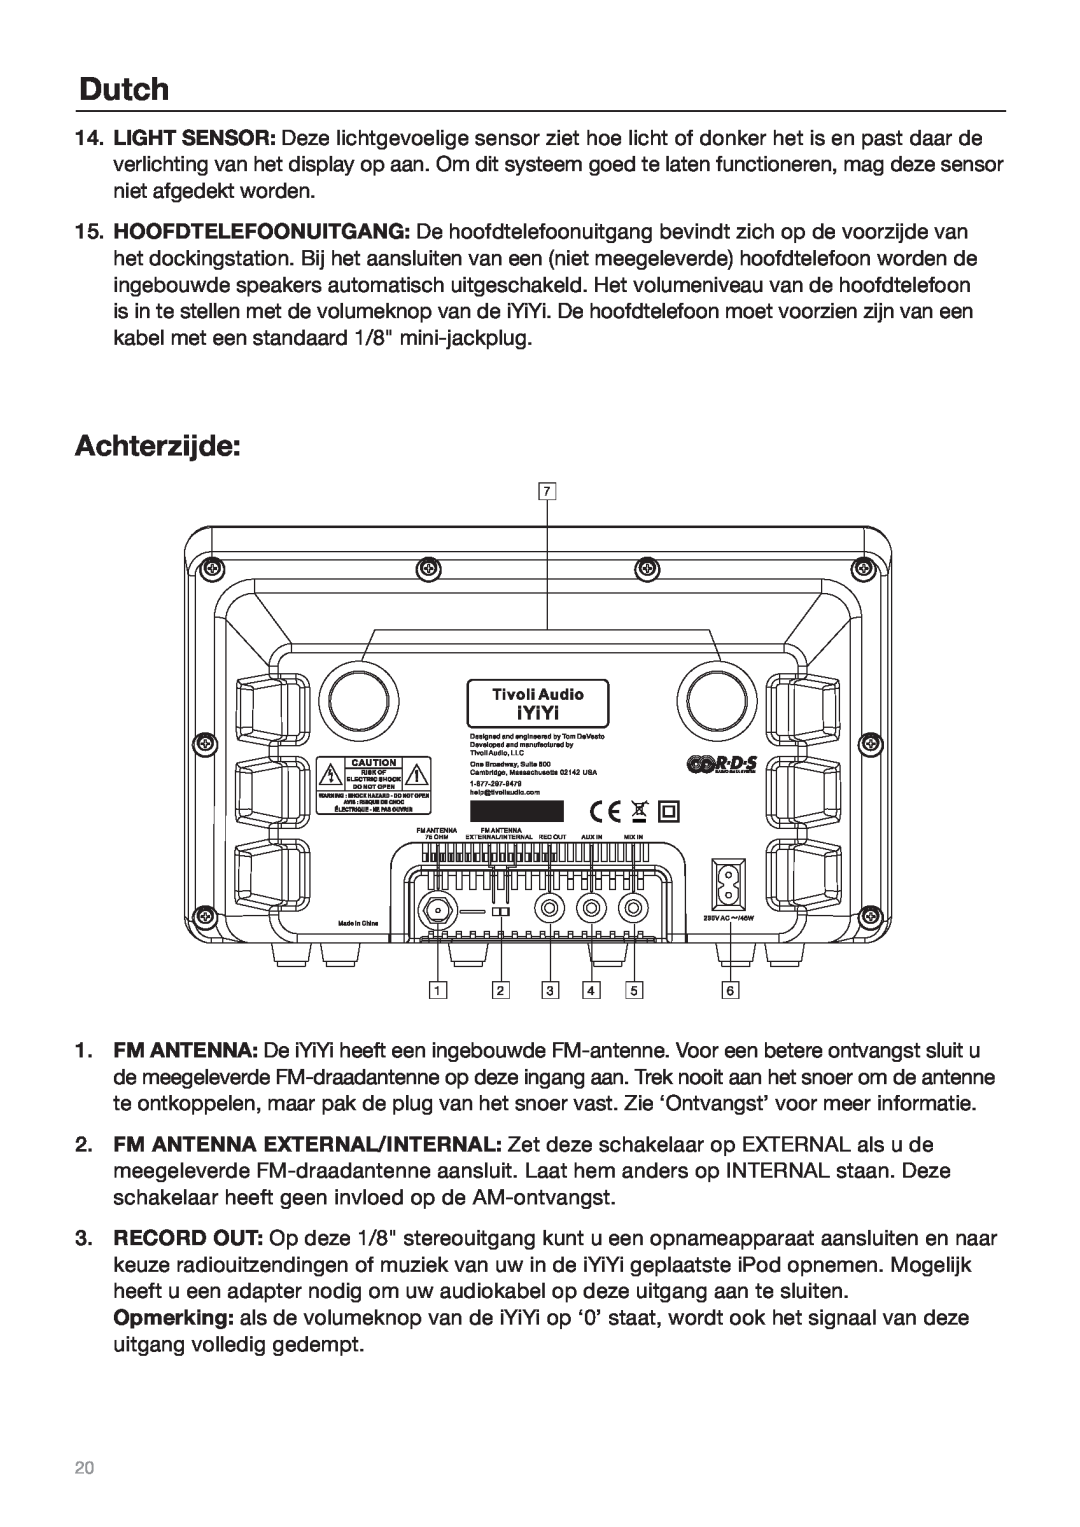 Tivoli Audio Sound System owner manual Achterzijde, Dutch 